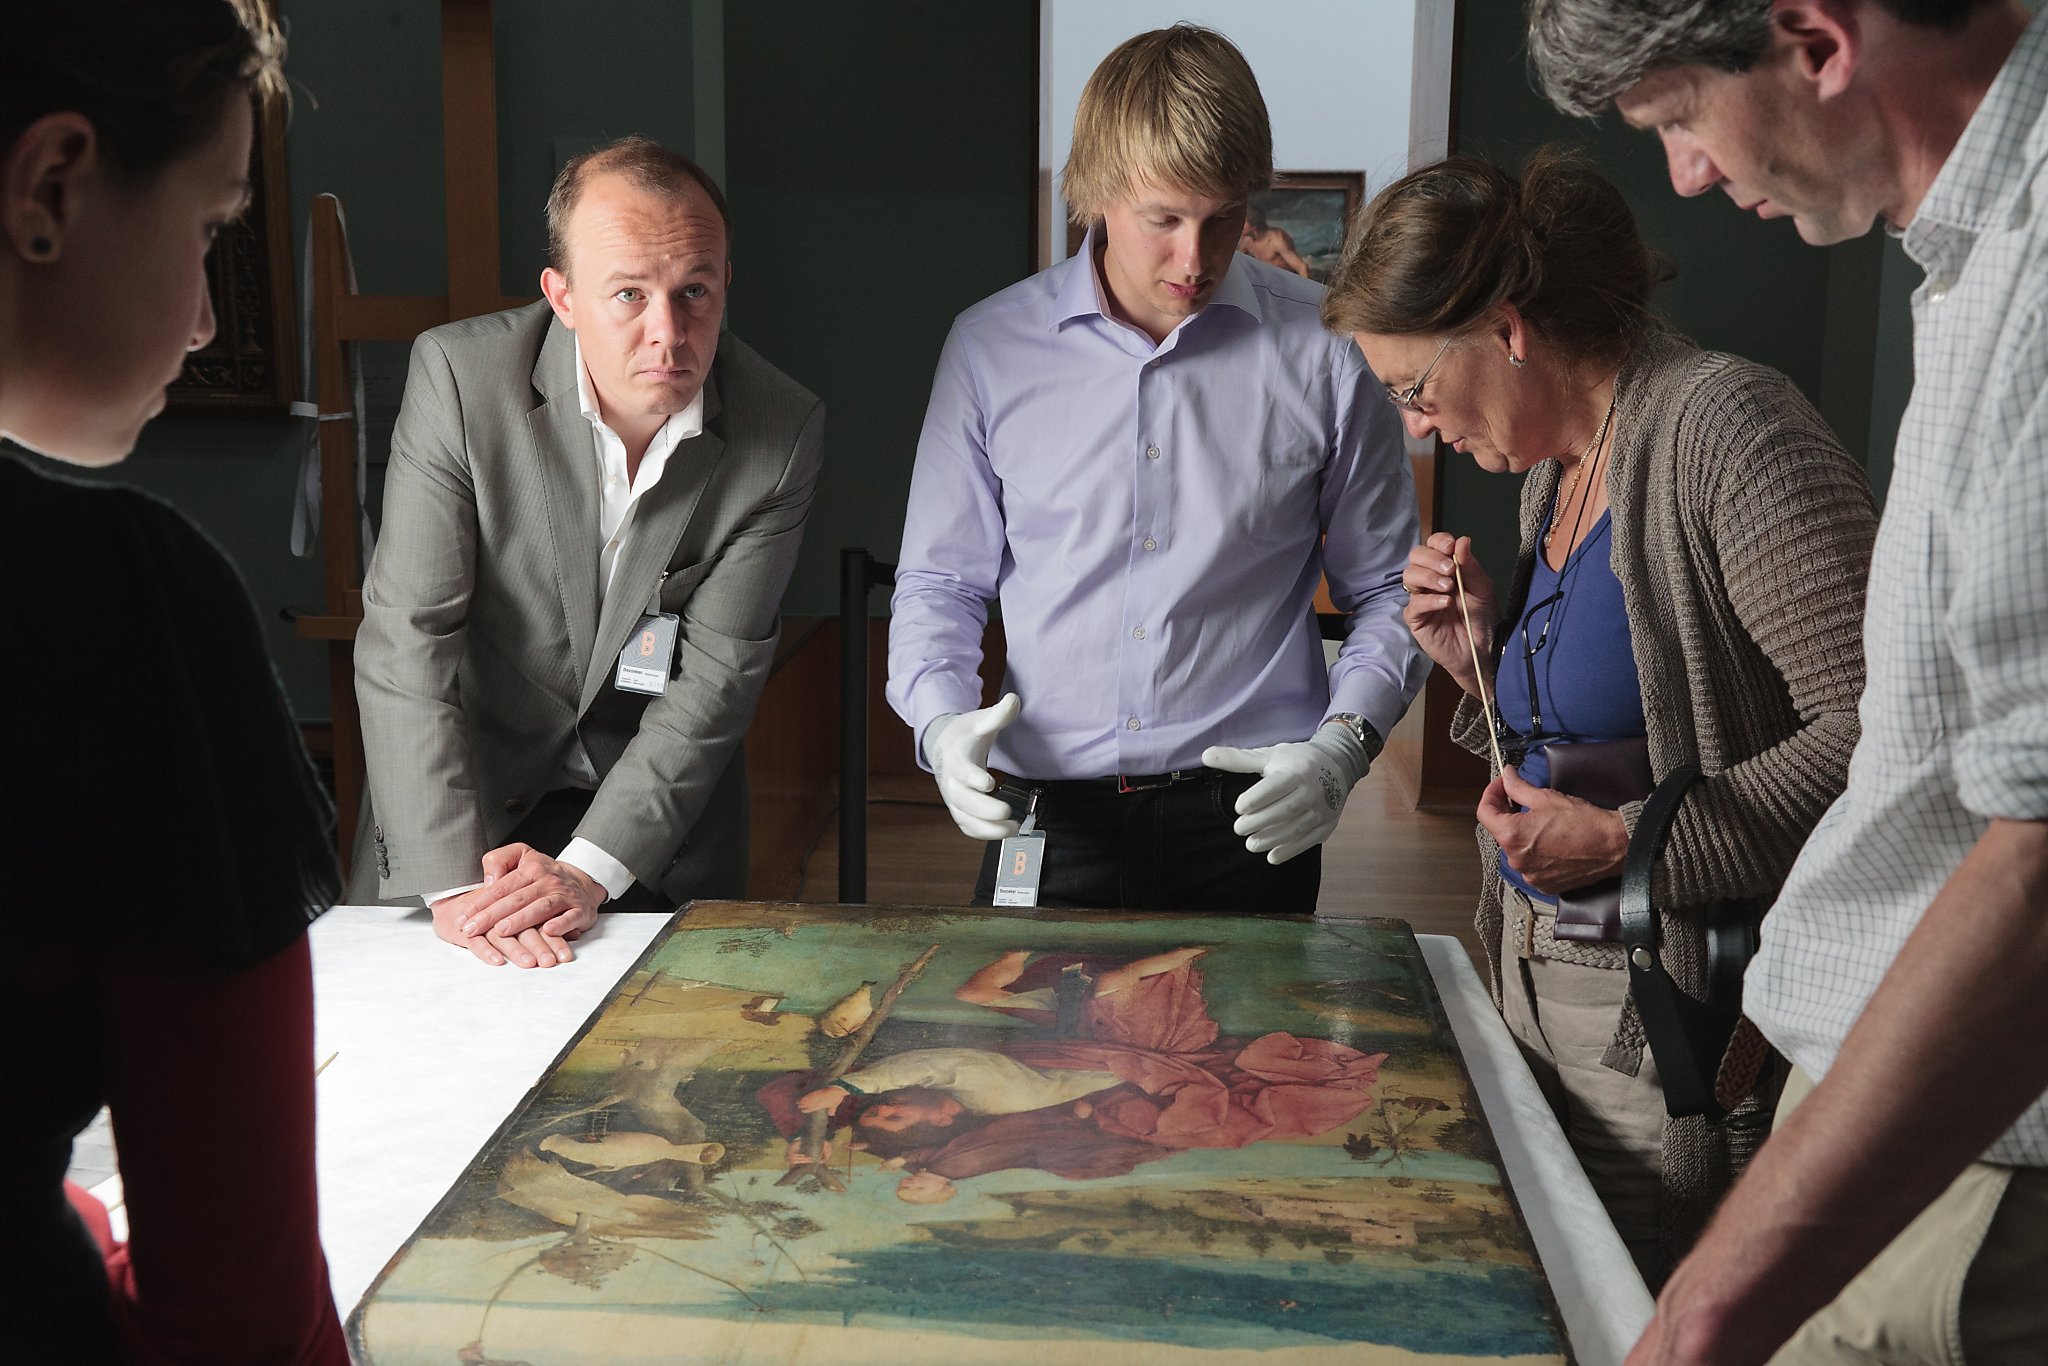 Documentary examines creativity of painter Hieronymus Bosch - SFGate